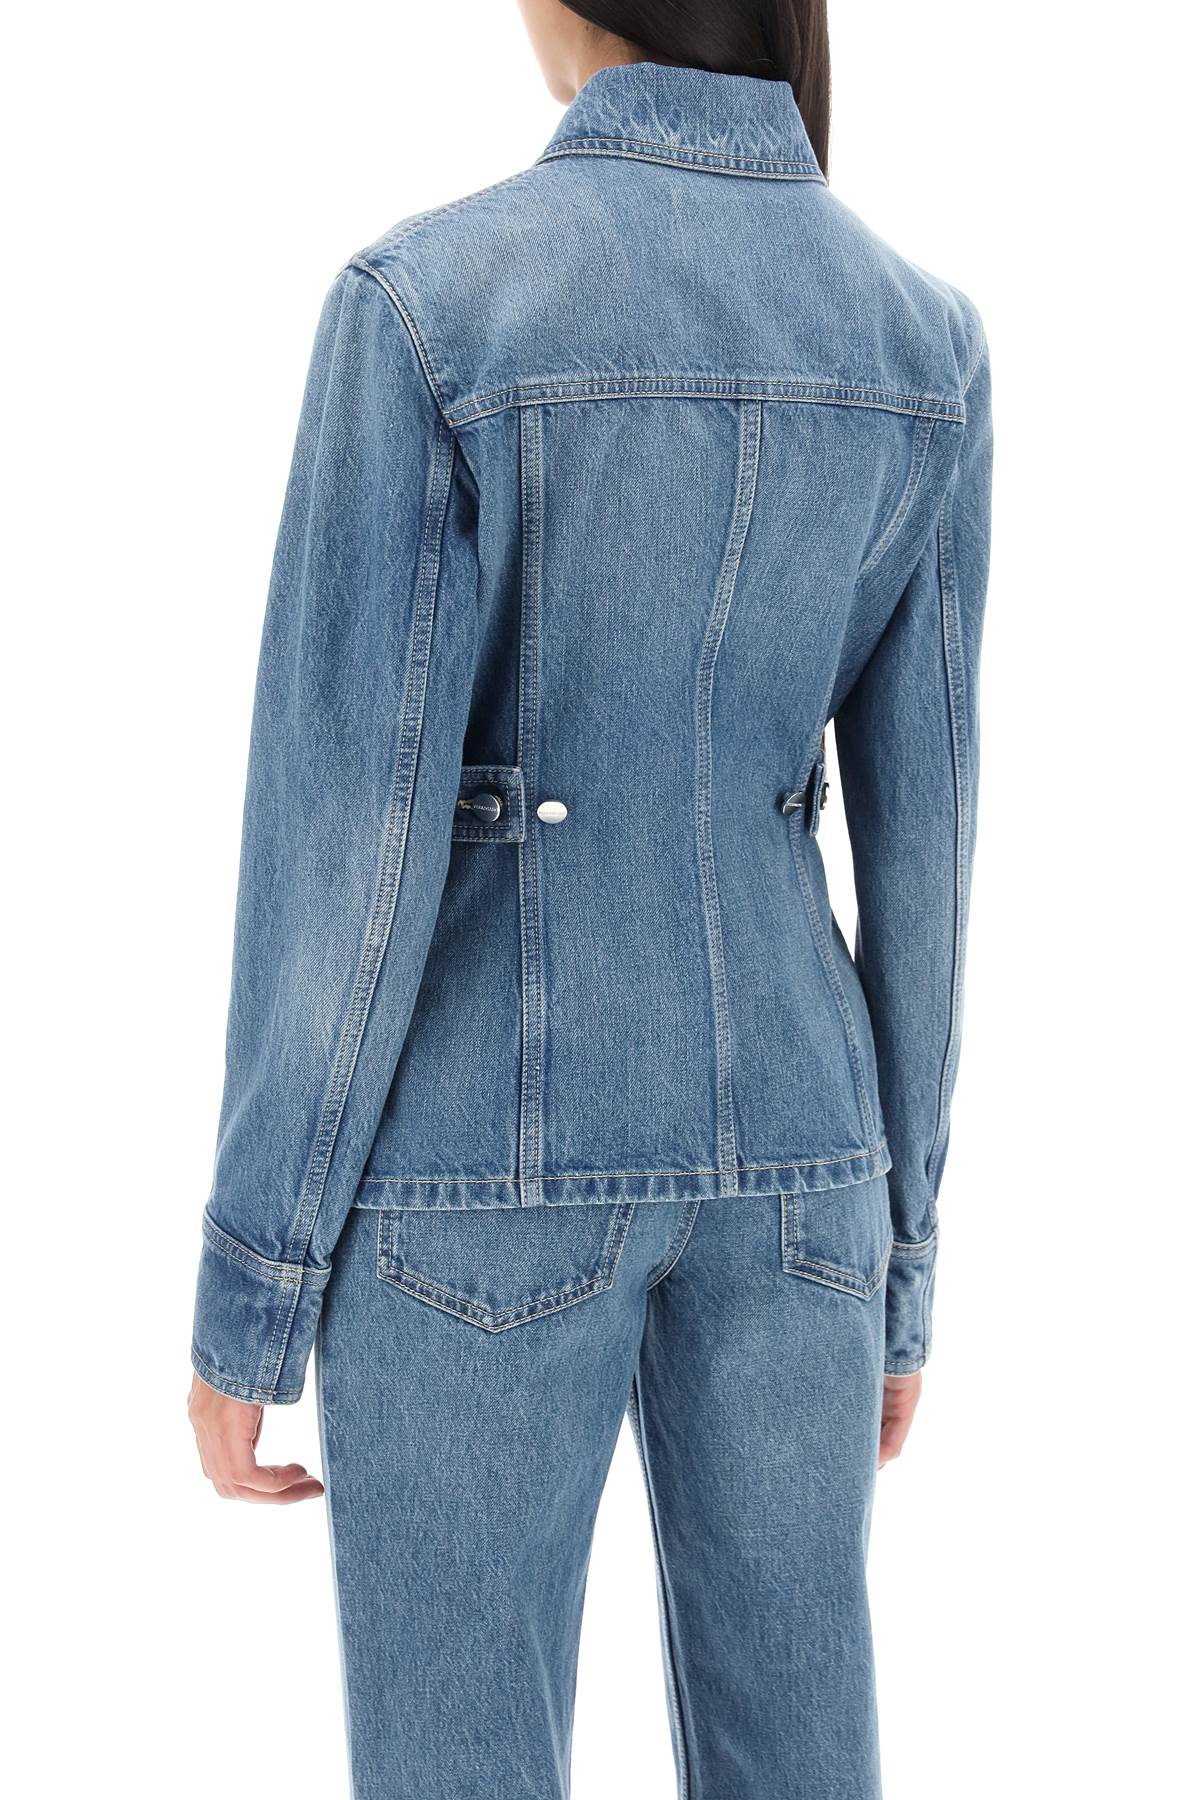 Shop Ferragamo Vintage Blue Denim Jacket For Women